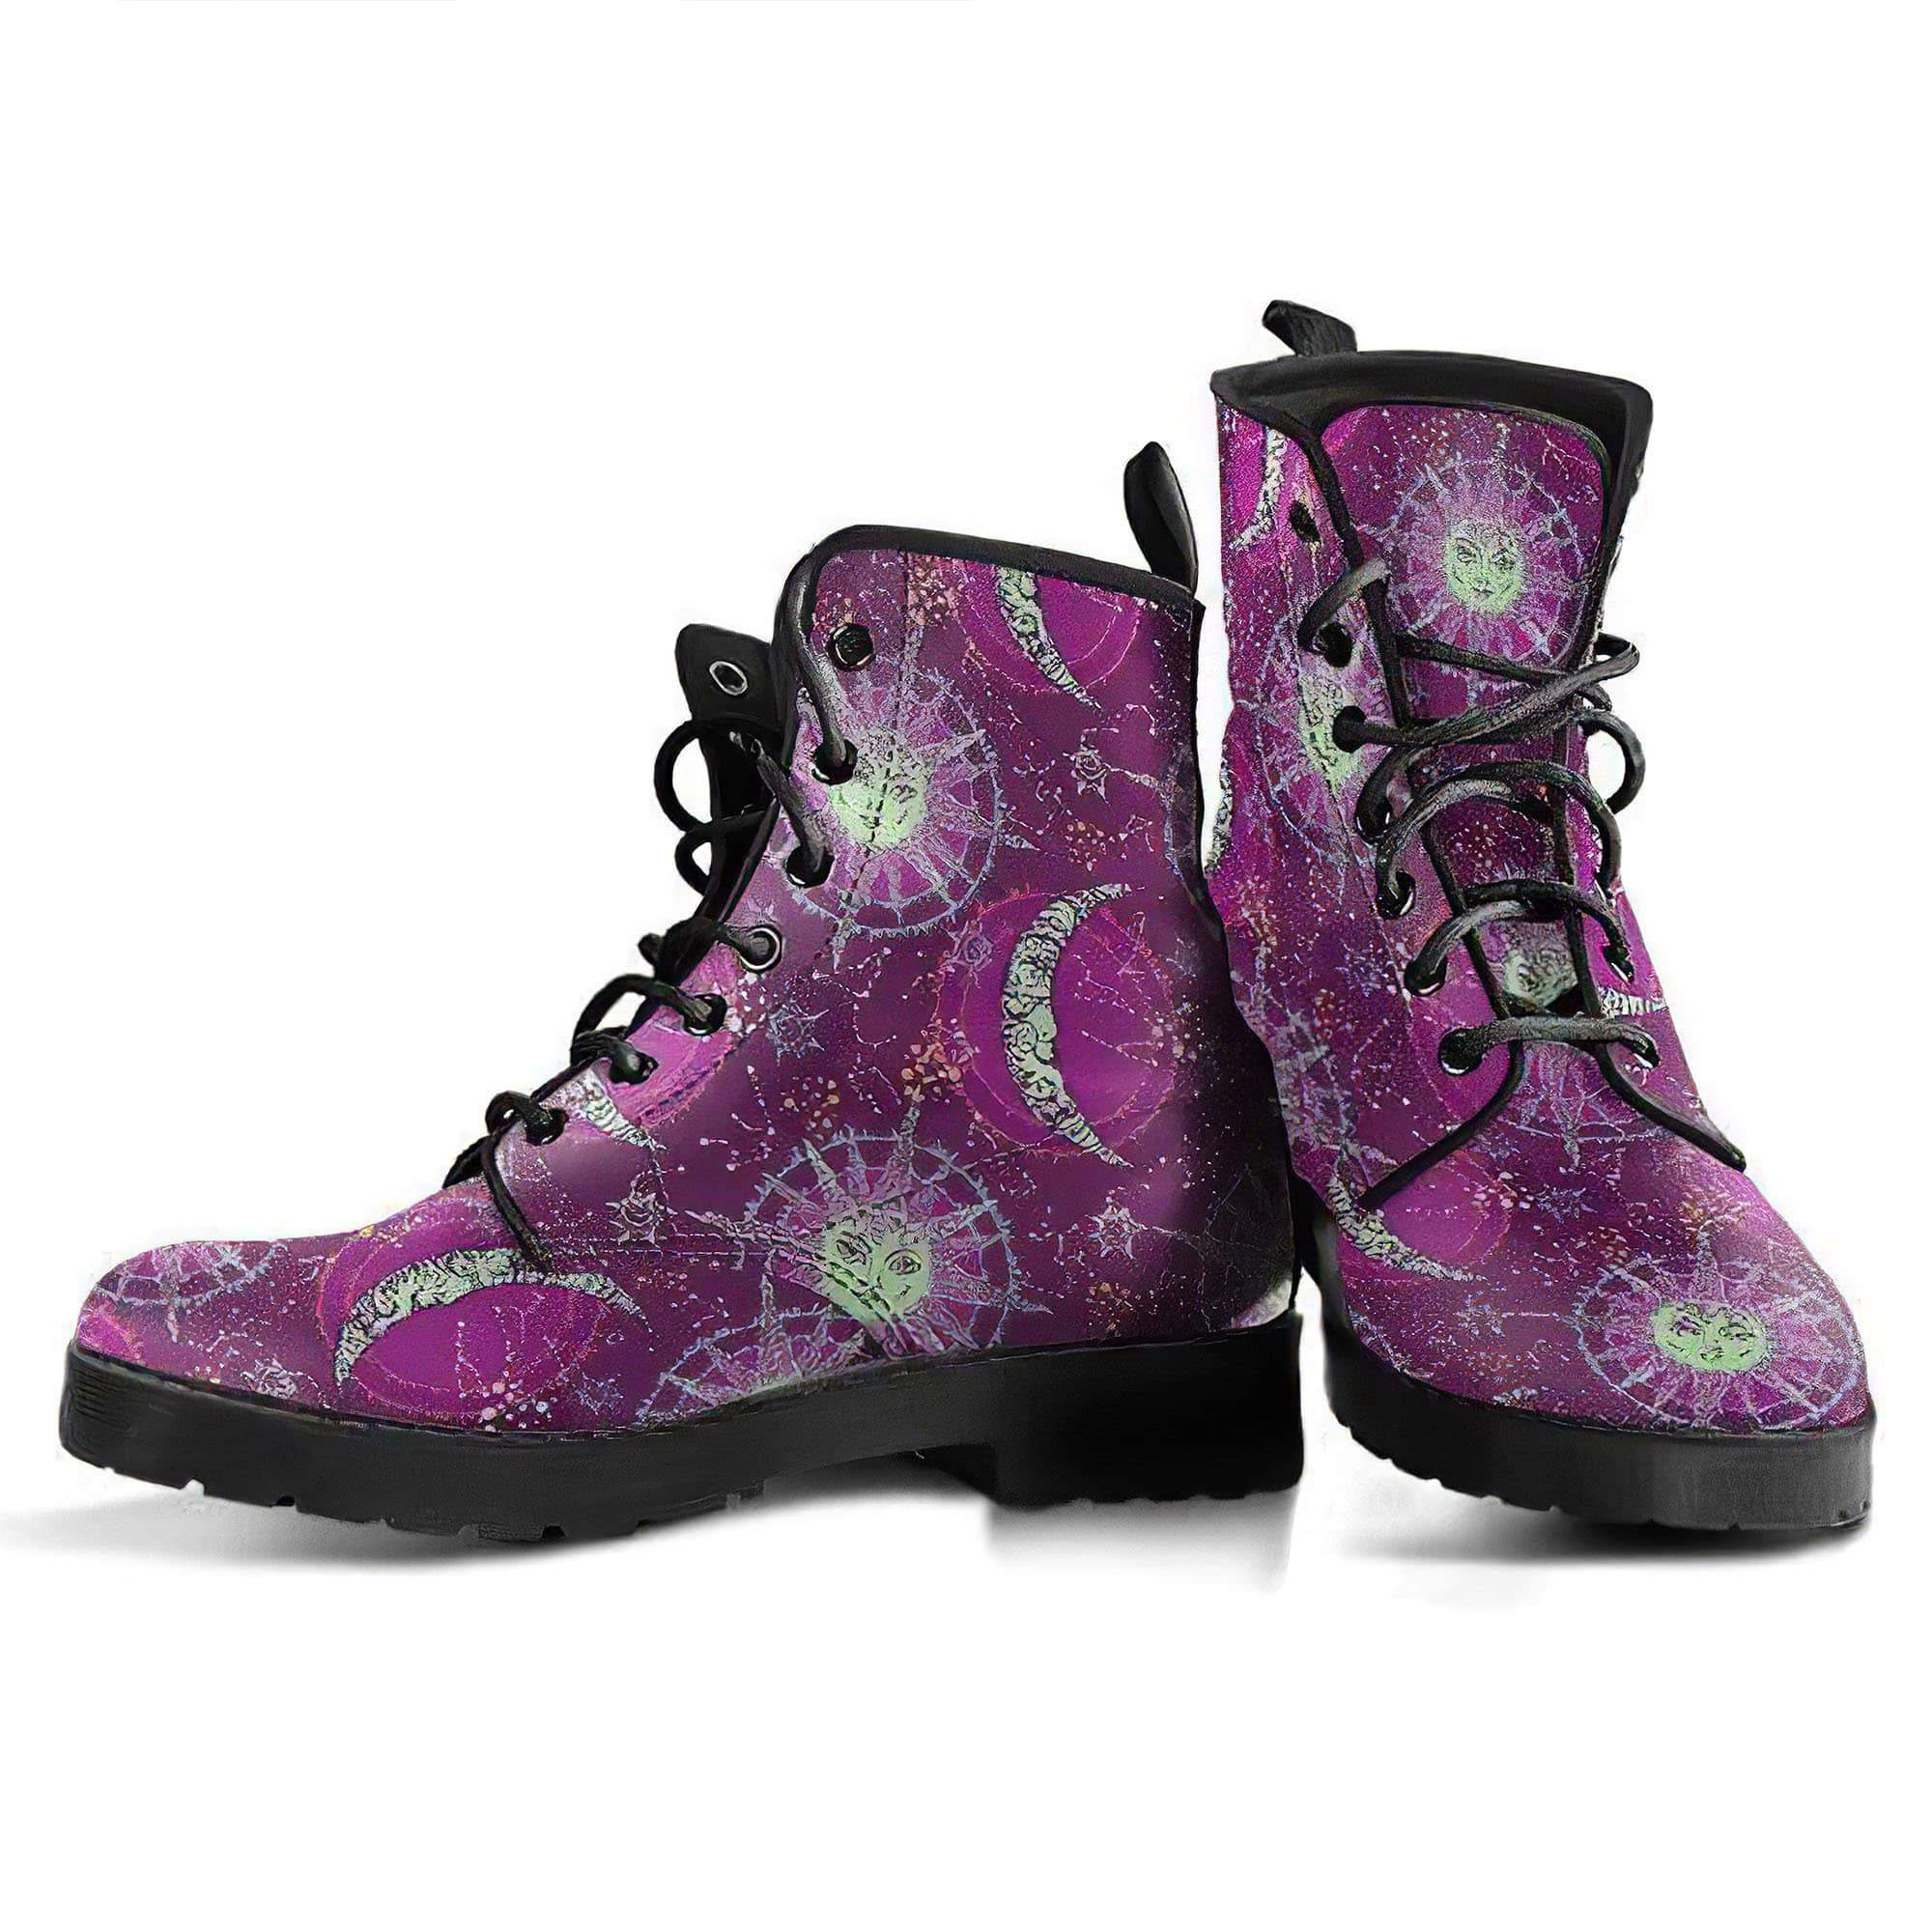 sun-moon-purple-women-s-leather-boots-women-s-leather-boots-12051962593341.jpg